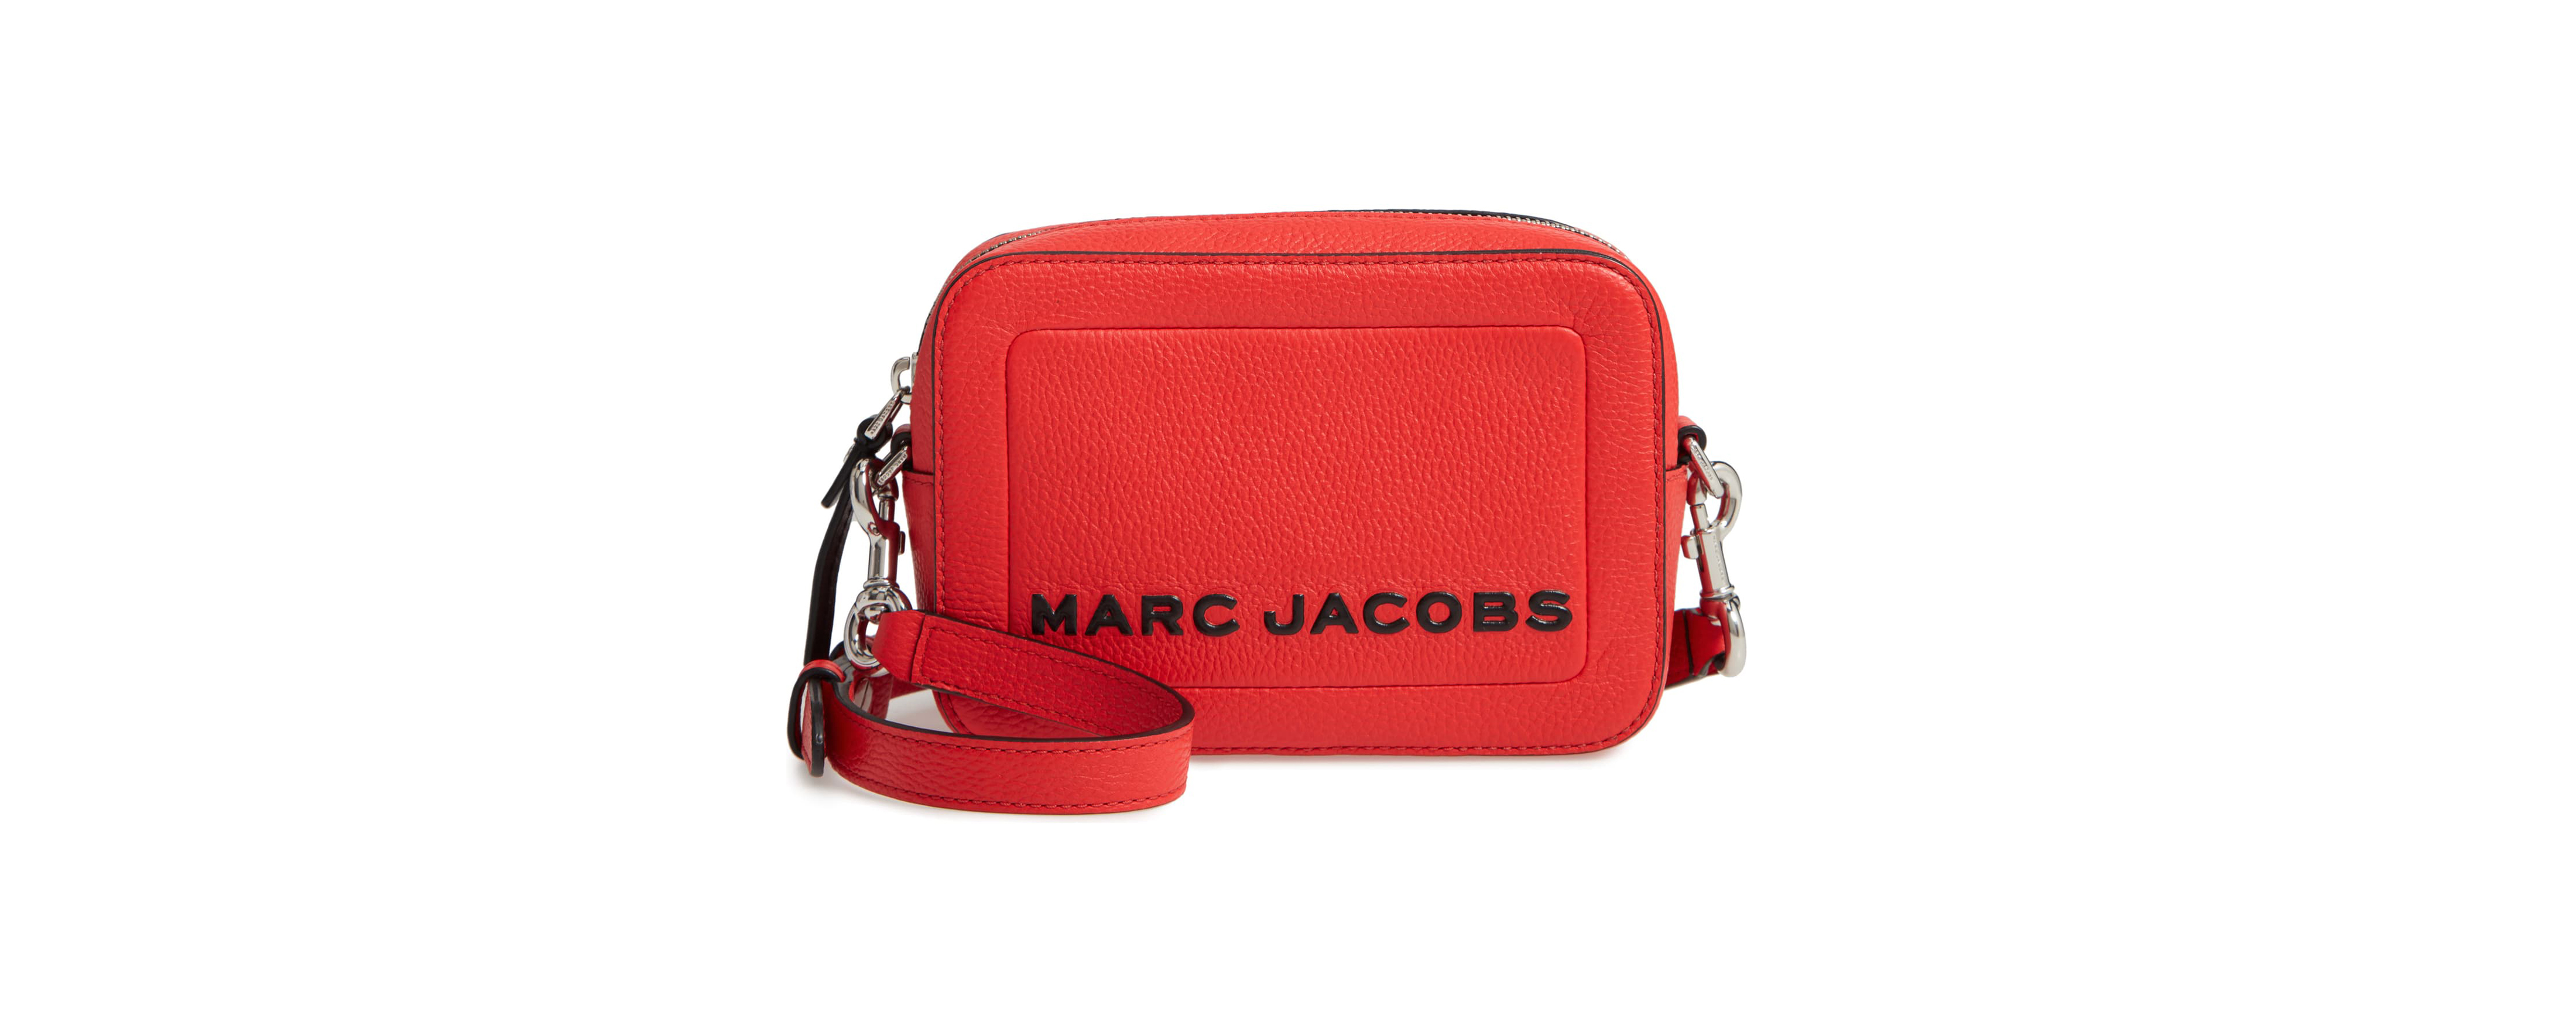 Marc Jacobs Outlet: The J leather bag - Coral | Marc Jacobs shoulder bag  H956L01PF22 online at GIGLIO.COM